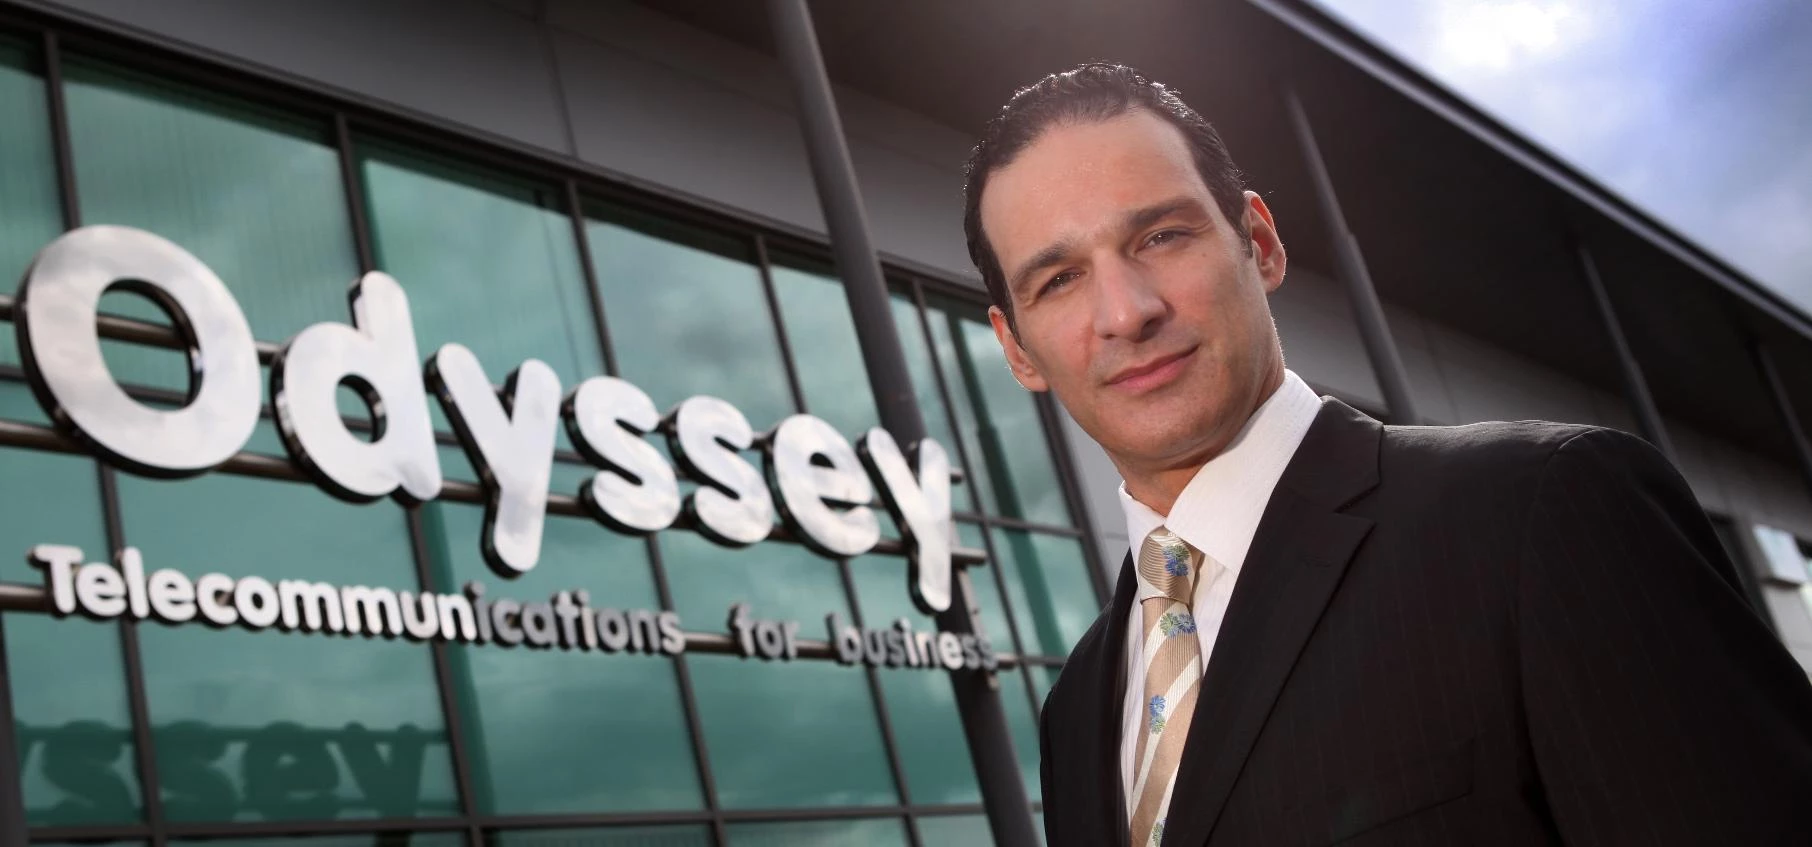 Odyssey Systems' managing director, Mike Odysseas